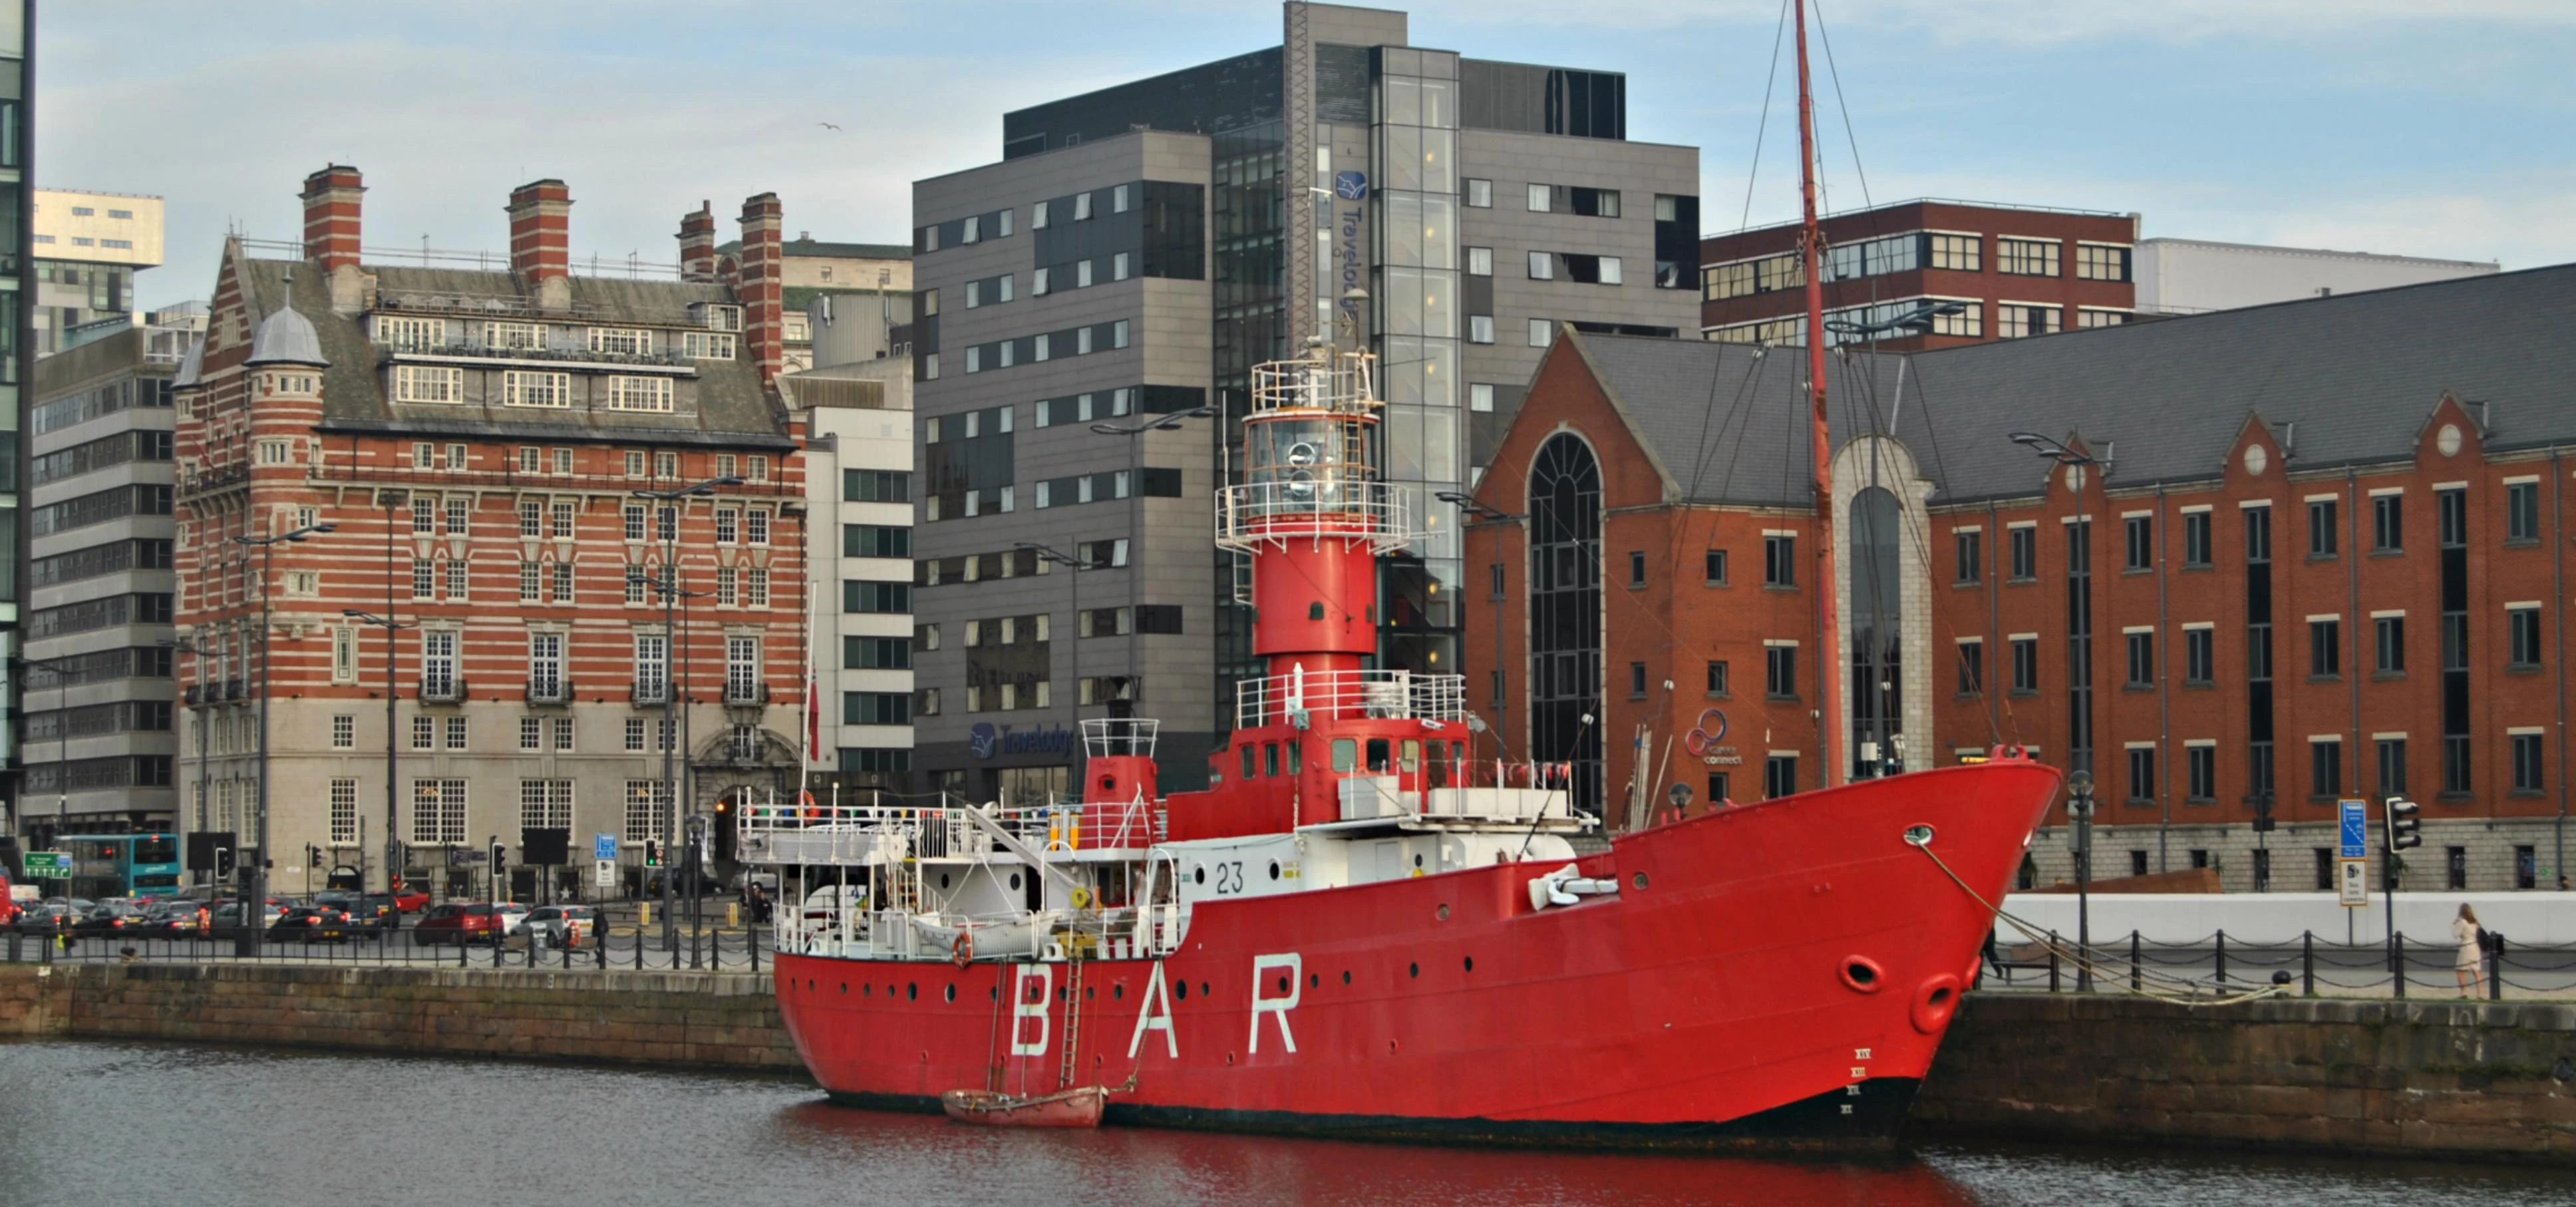 Planet lightship, Canning Dock, Liverpool